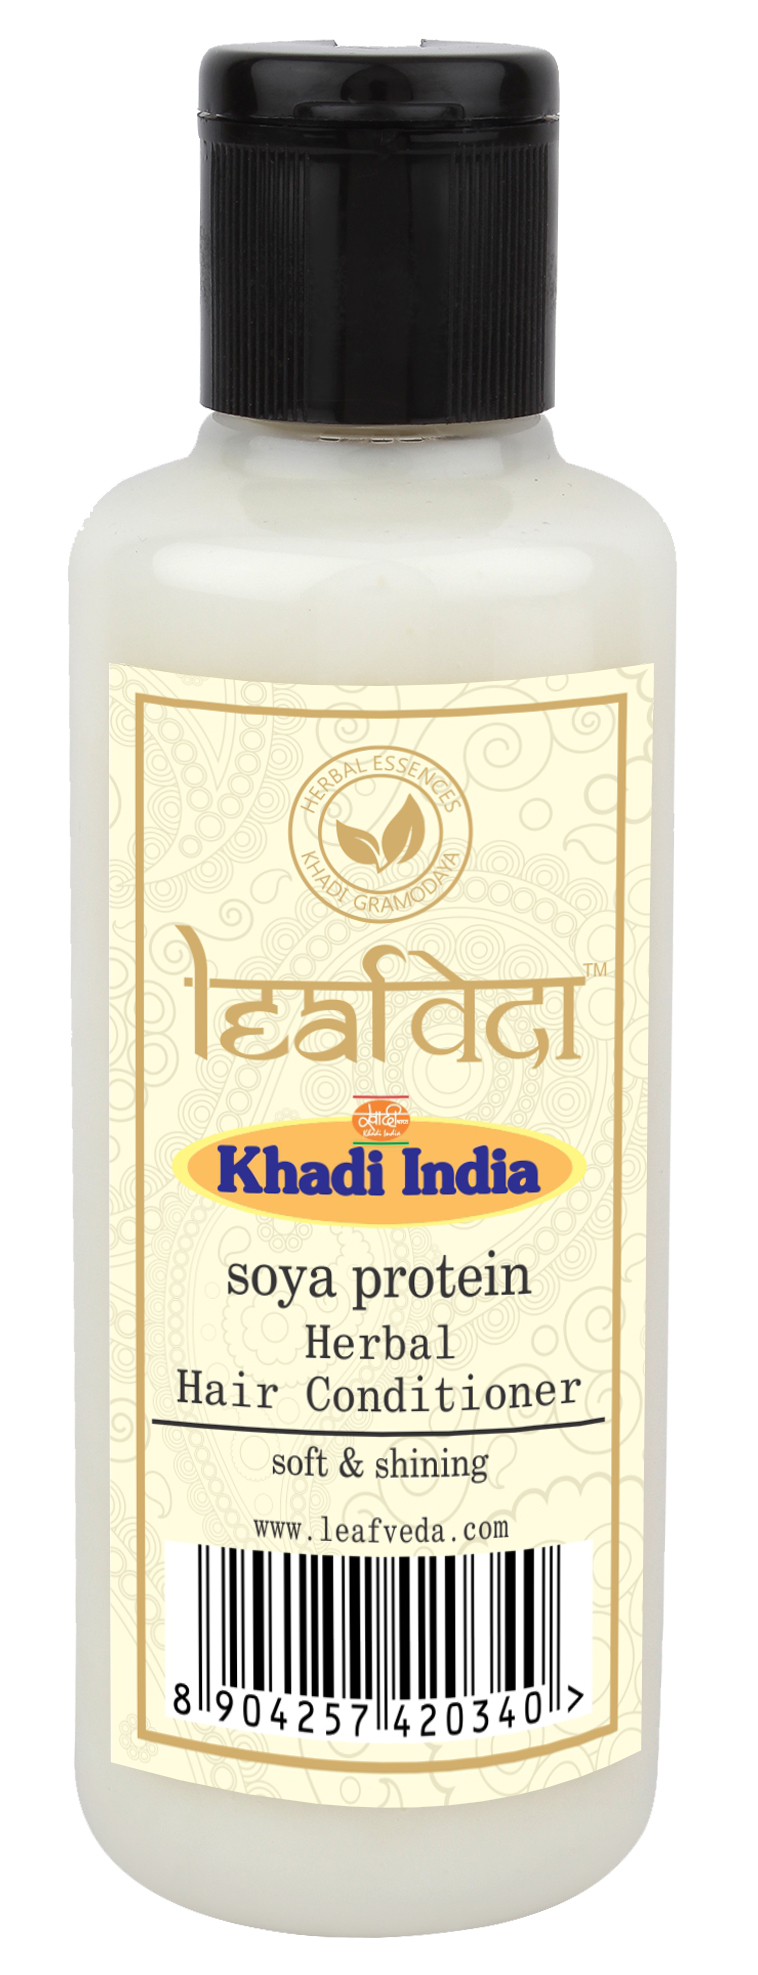 Buy Khadi Leafveda Soya Protein Conditioner at Best Price Online